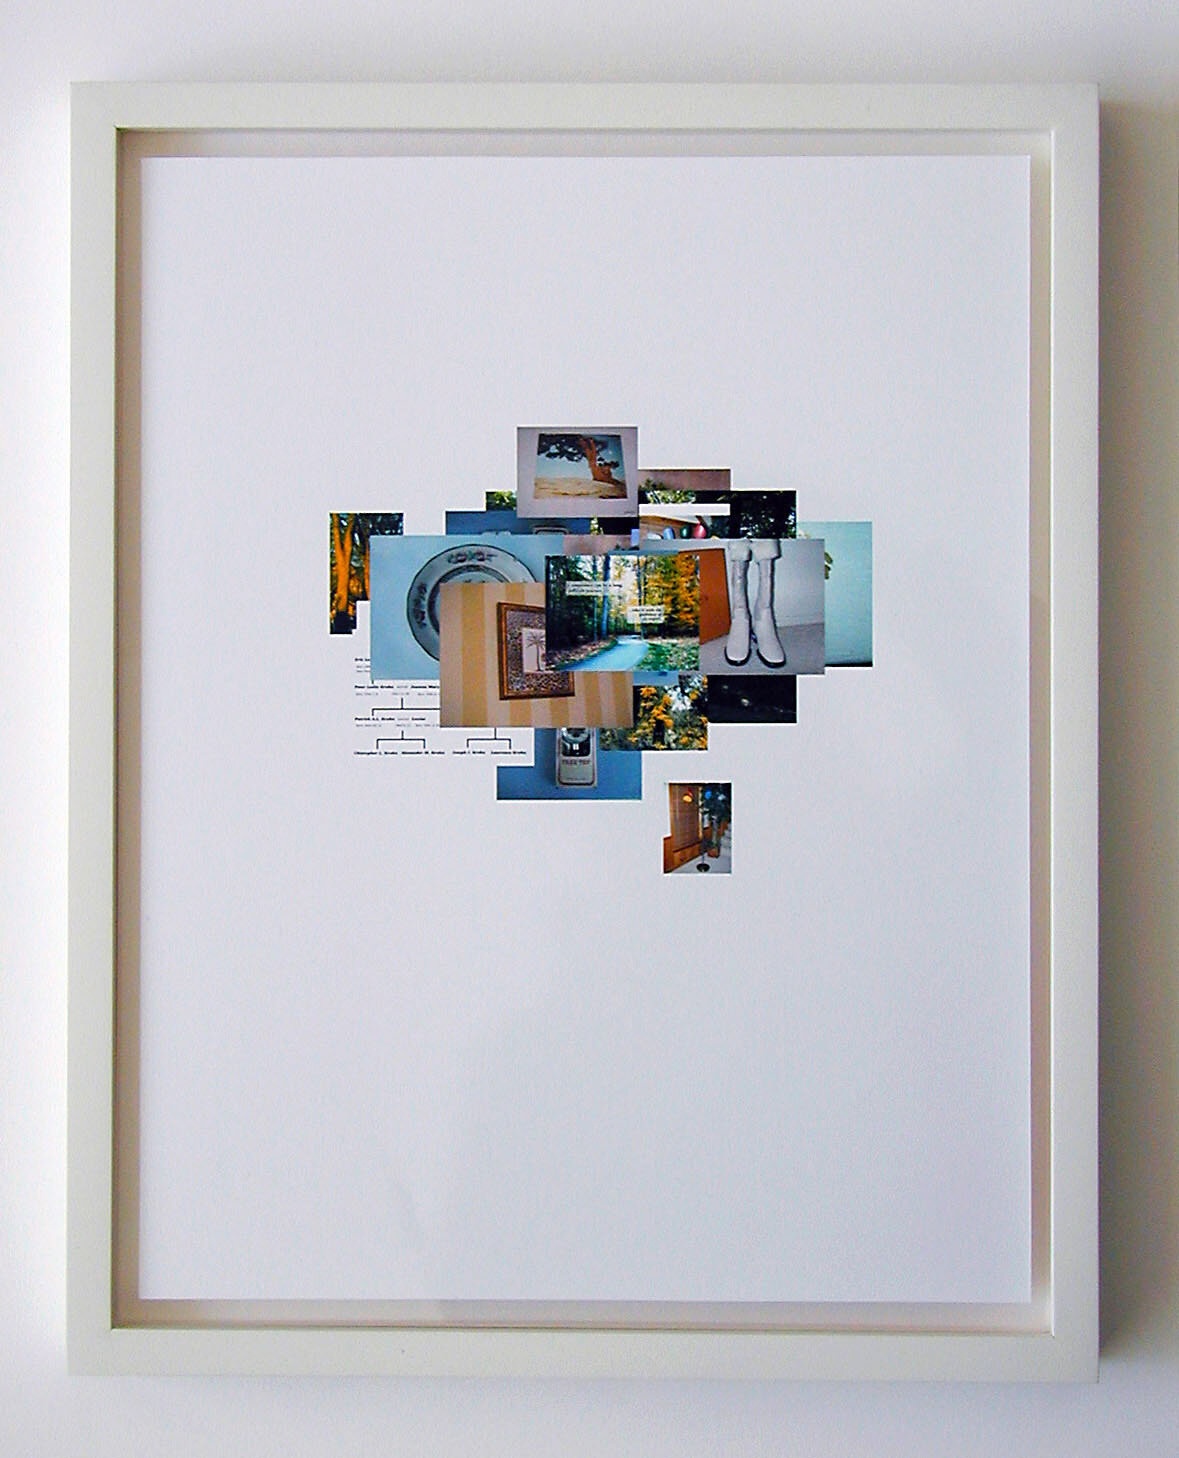   Tree , 2003, chromogenic print, 12.5 x 9.75 inches (unframed) 